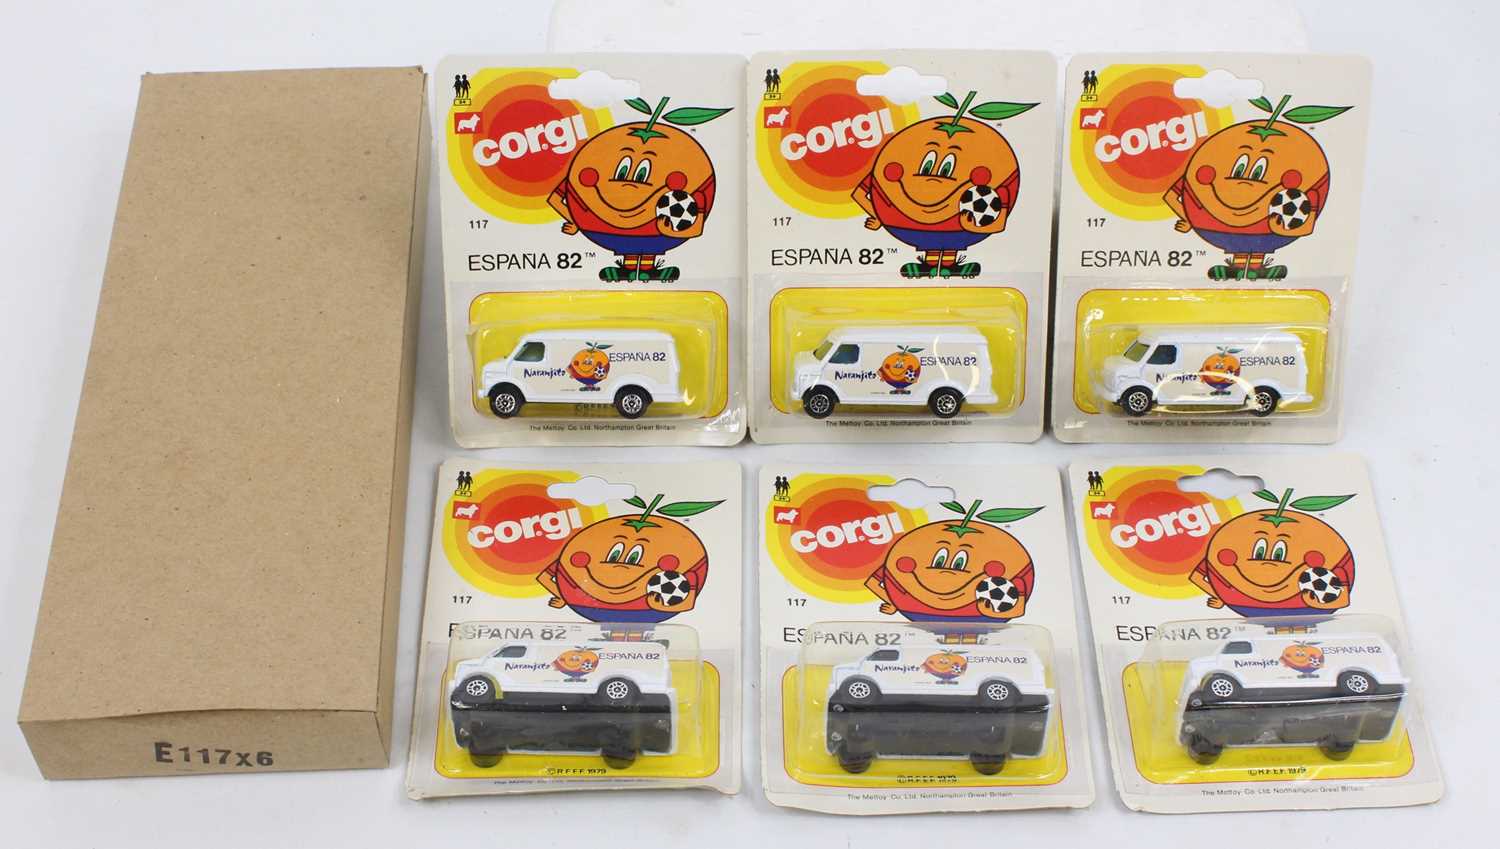 Corgi Toys trade box of six No. 117 Chevrolet delivery vans with Espana 1982 football advertising